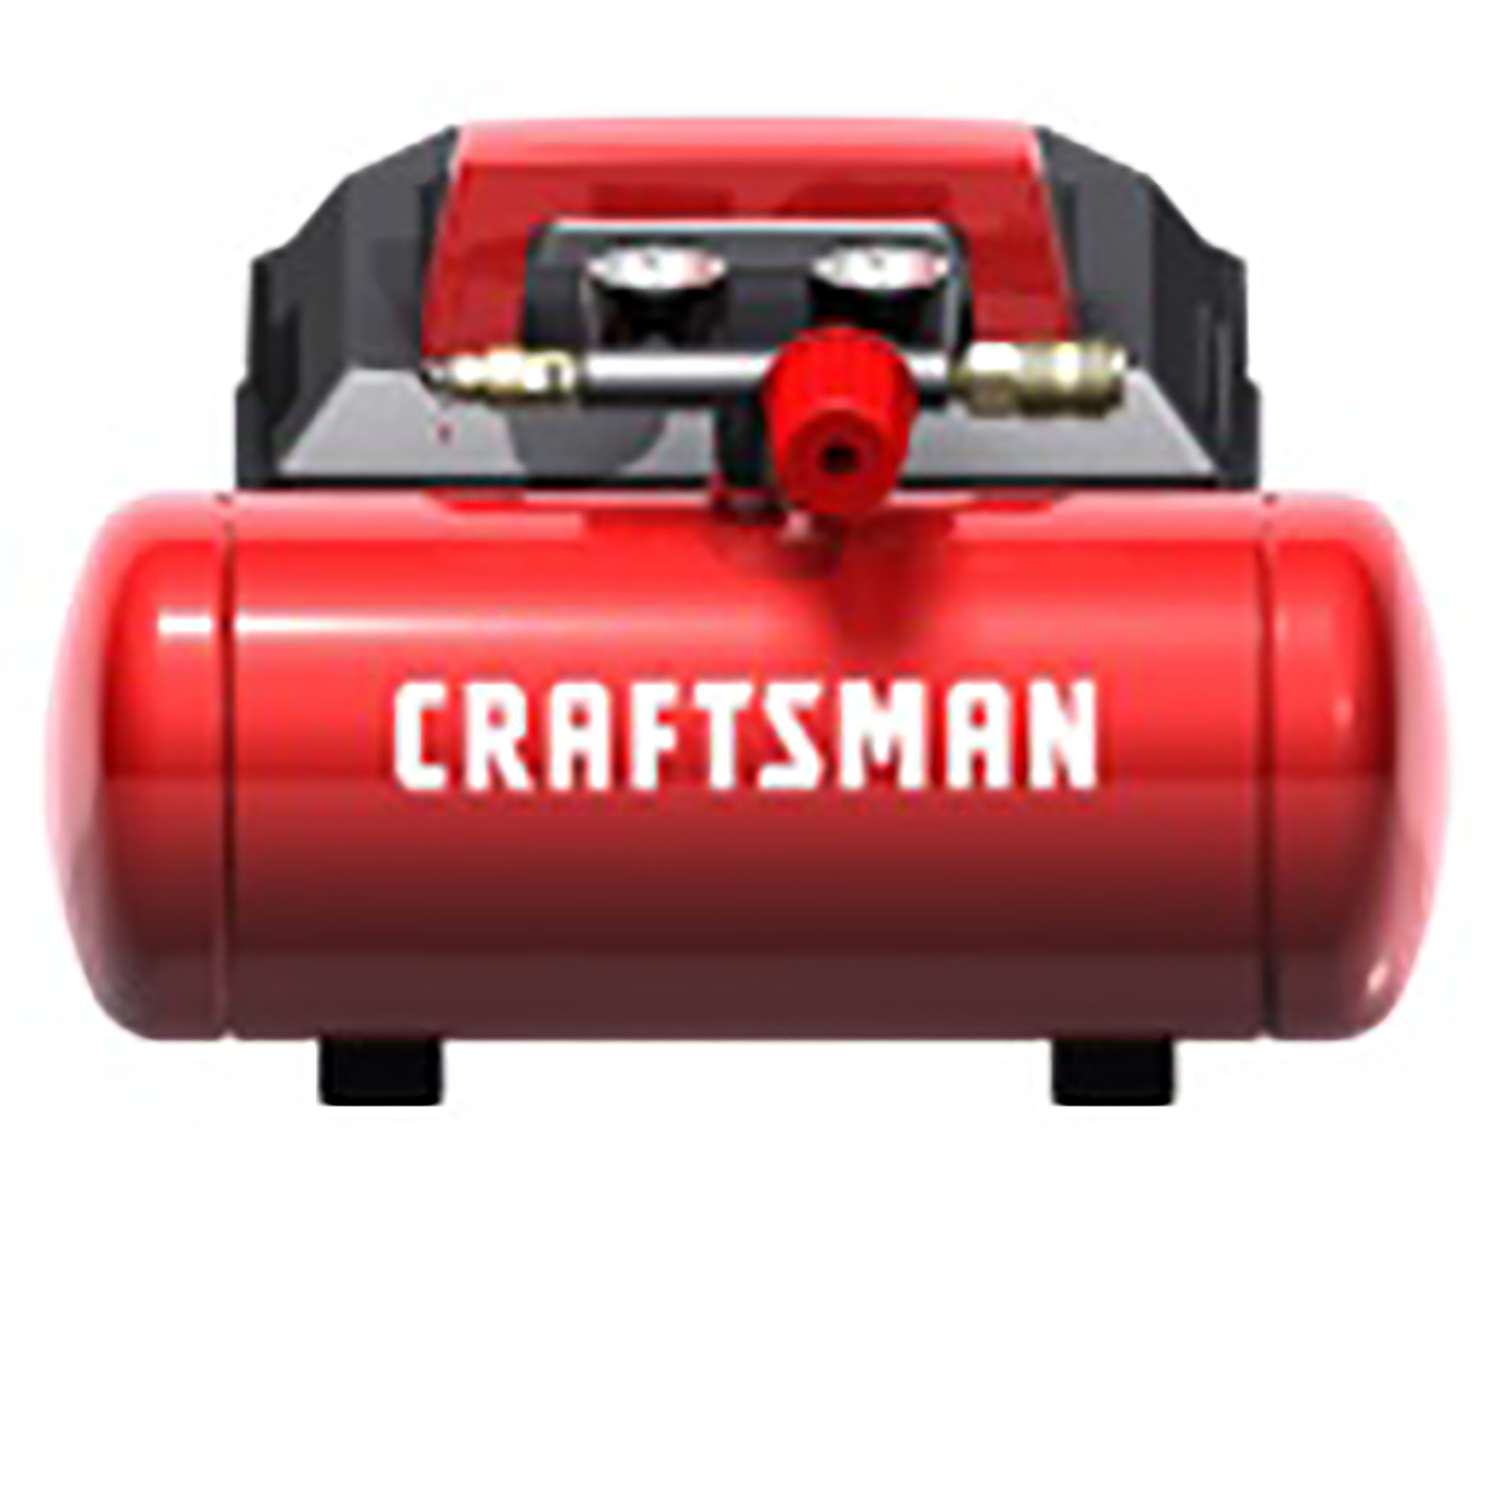 Craftsman 1.5 gal. Horizontal Portable Air Compressor 135